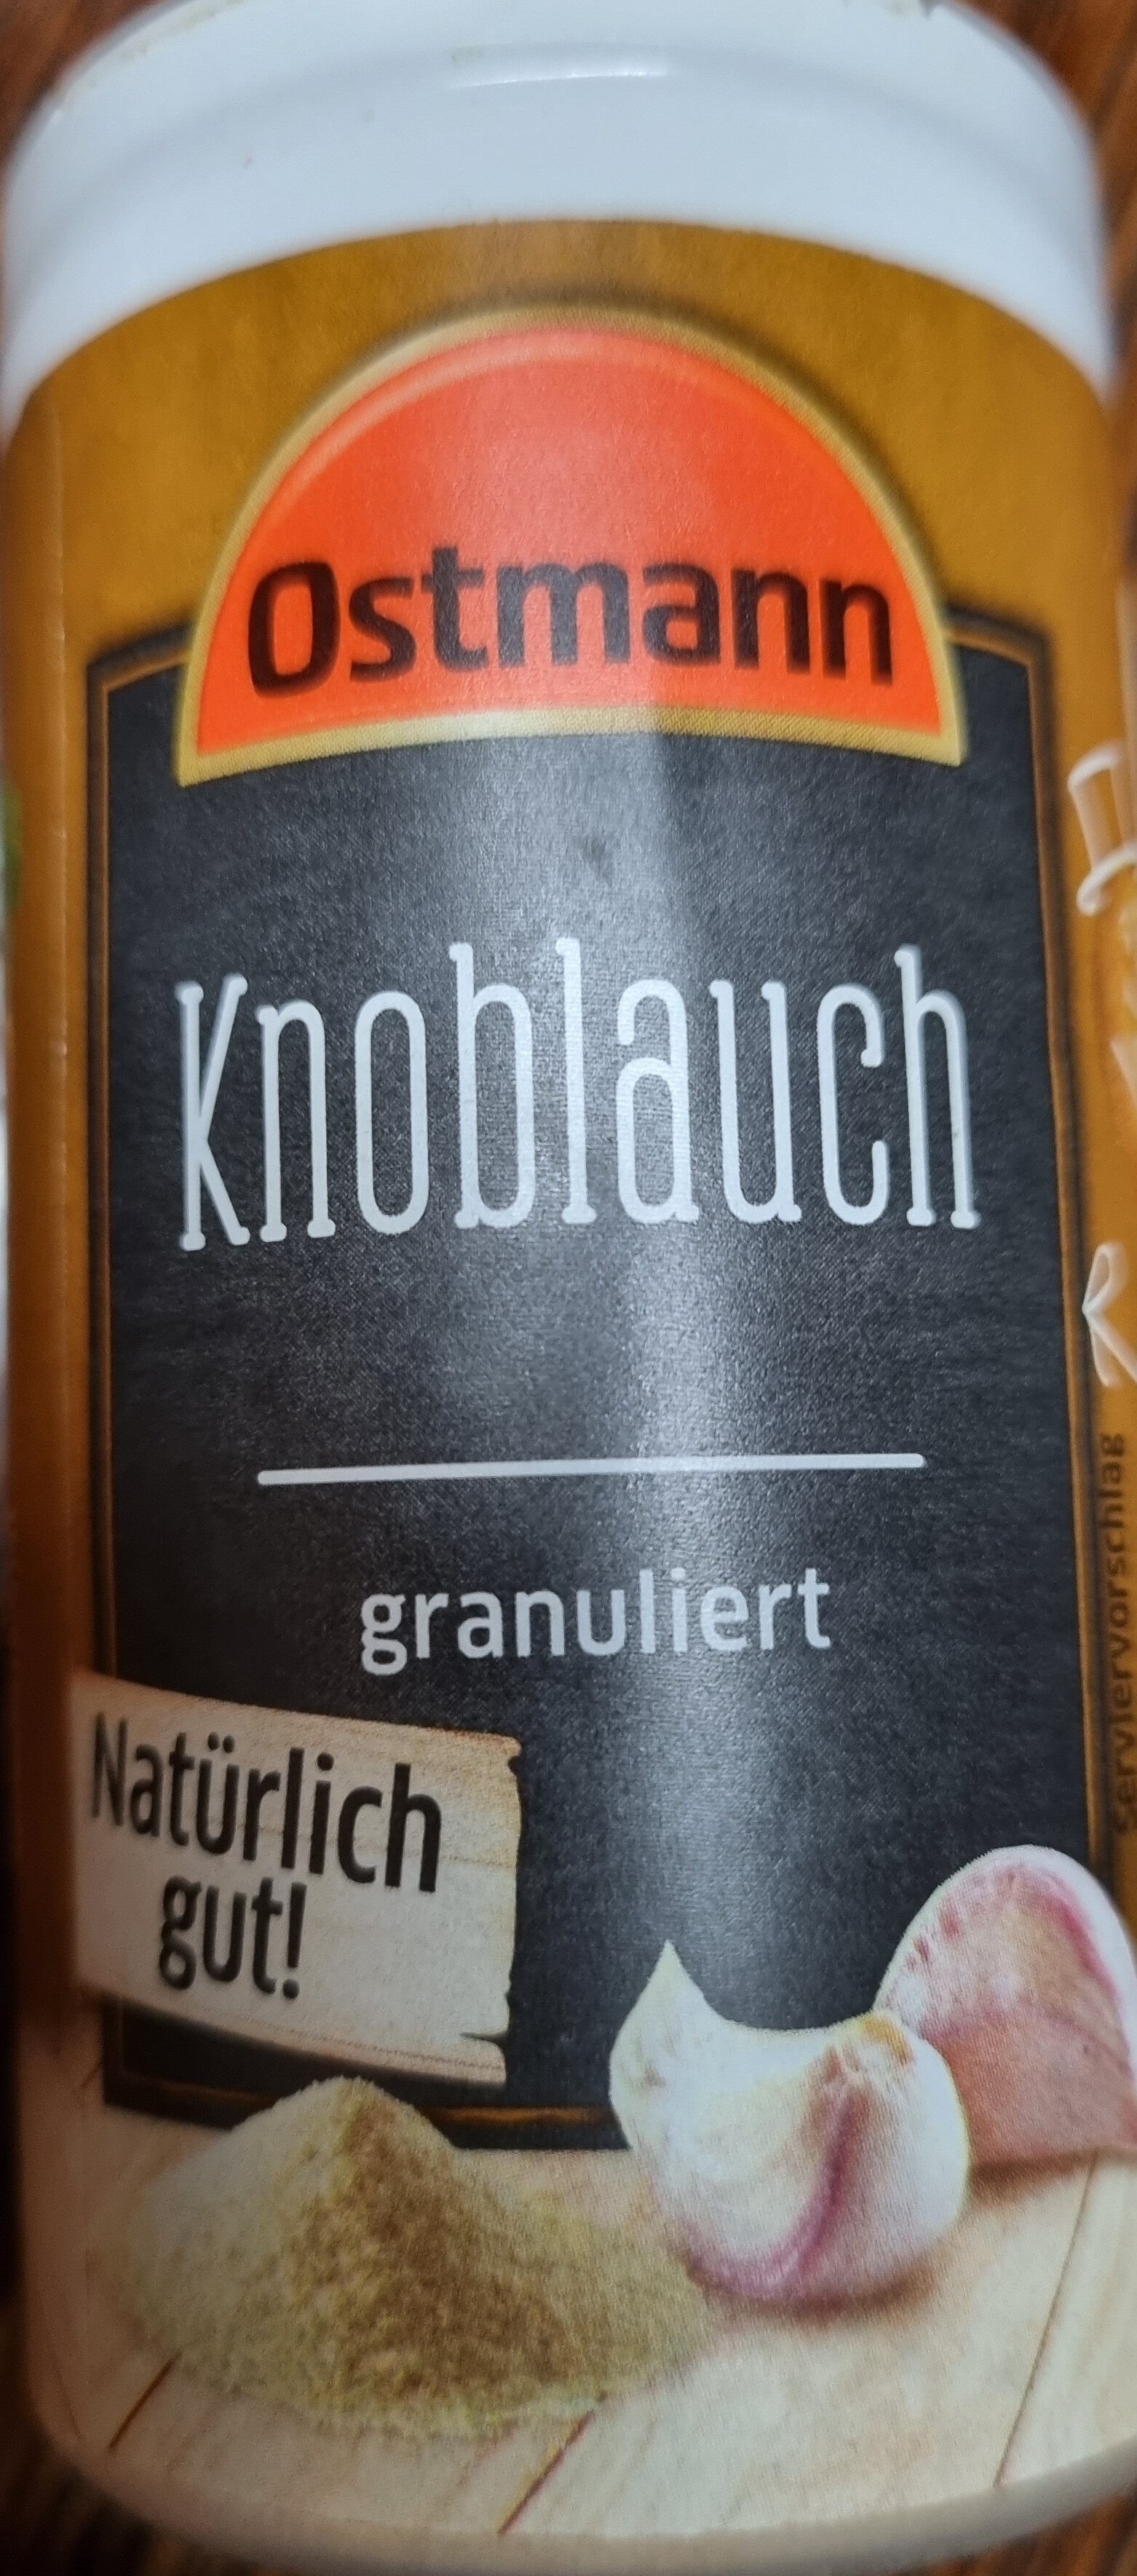 Knoblauch, granuliert - Ingredientes - de